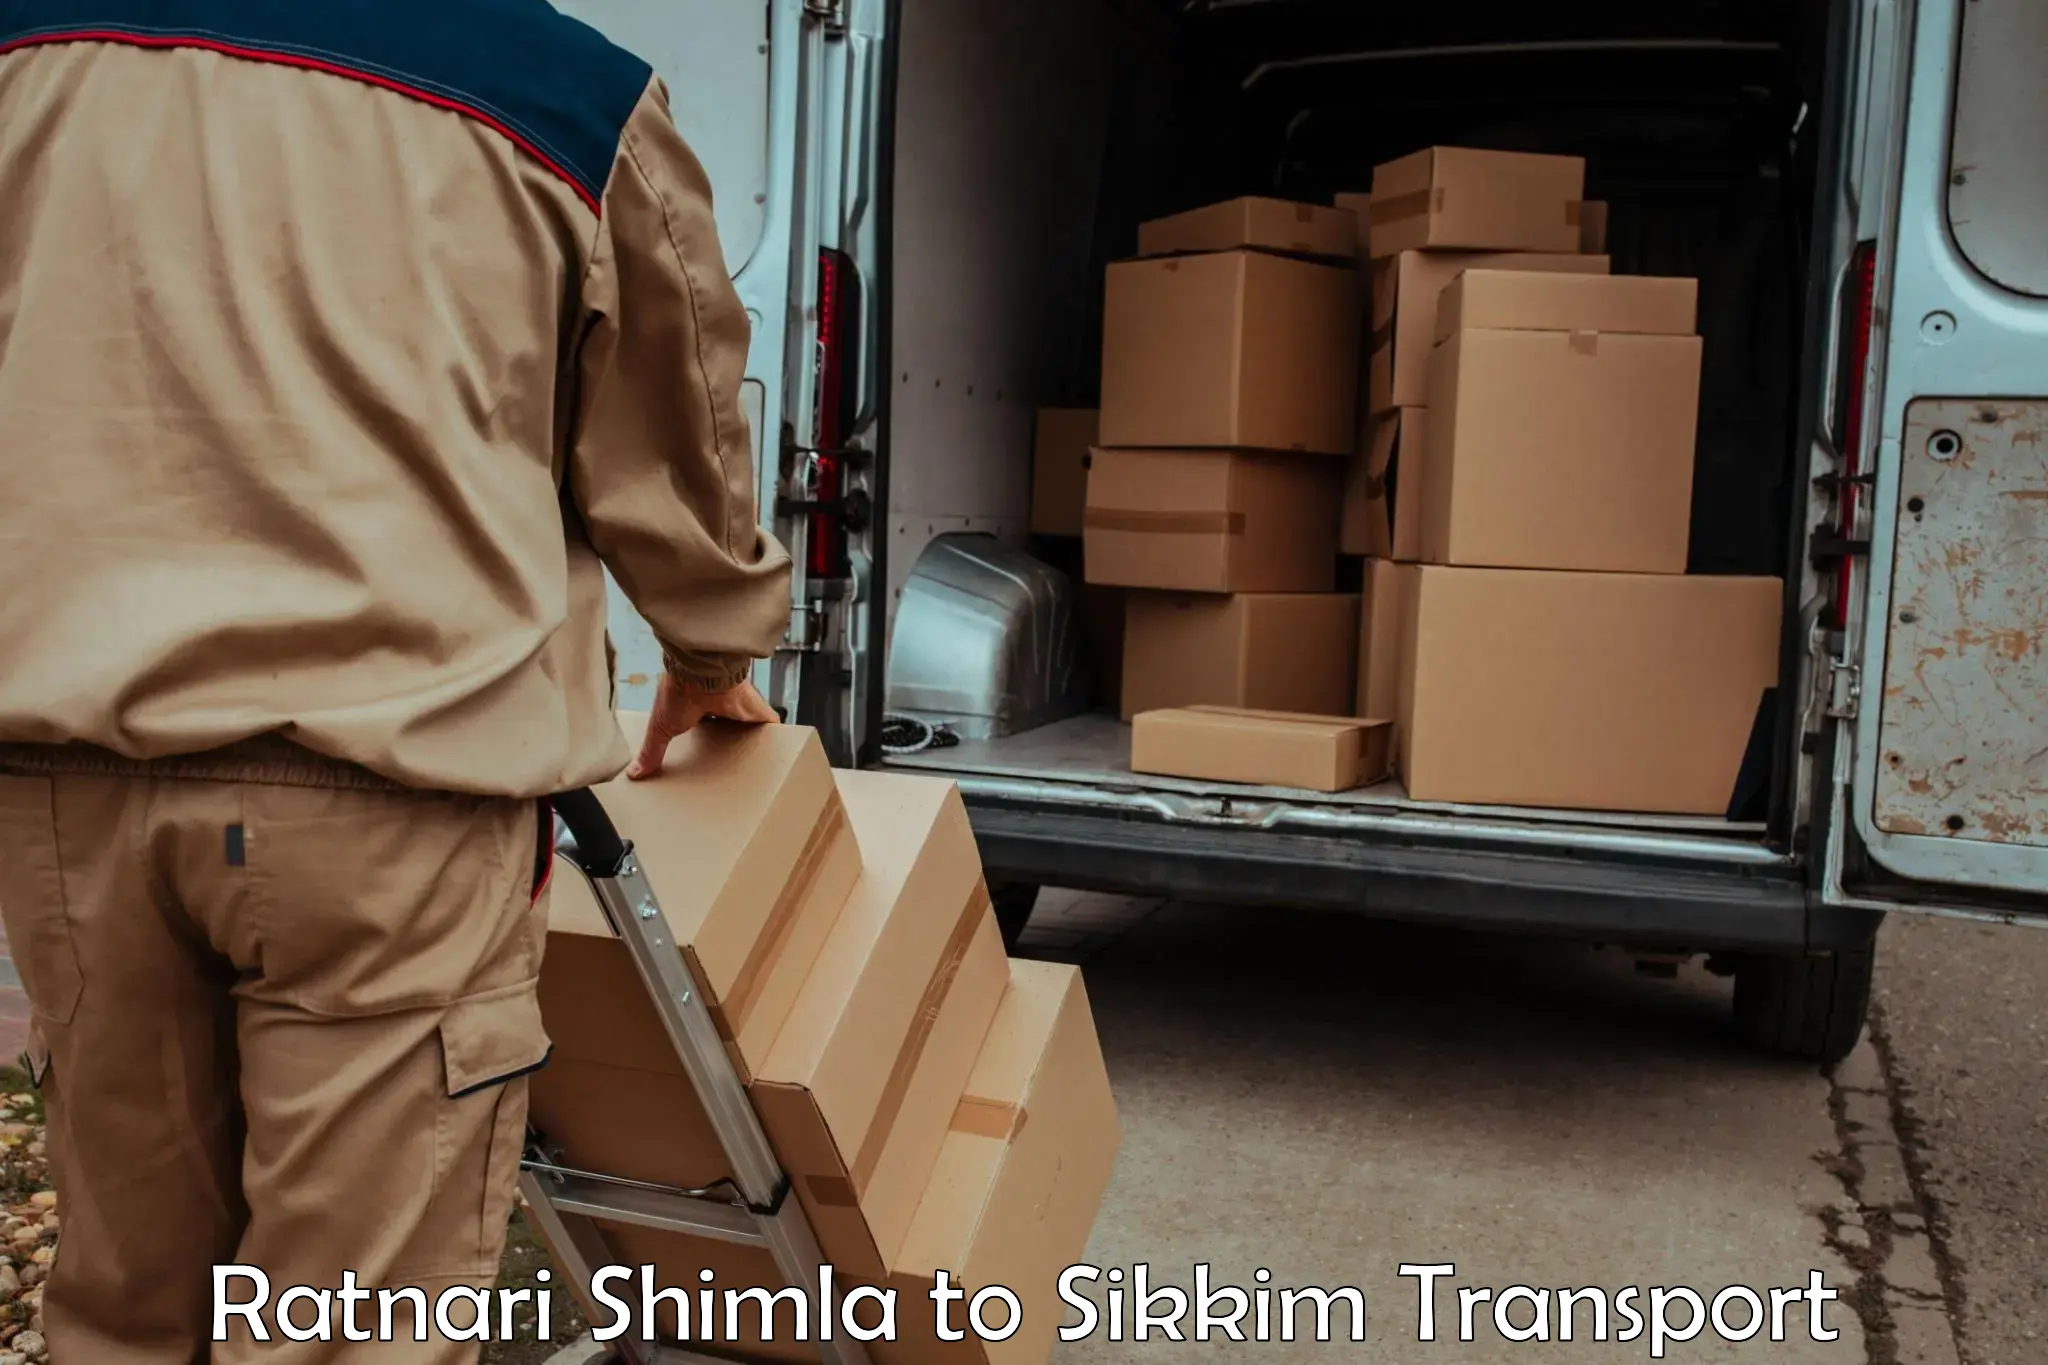 Transport services Ratnari Shimla to Pelling